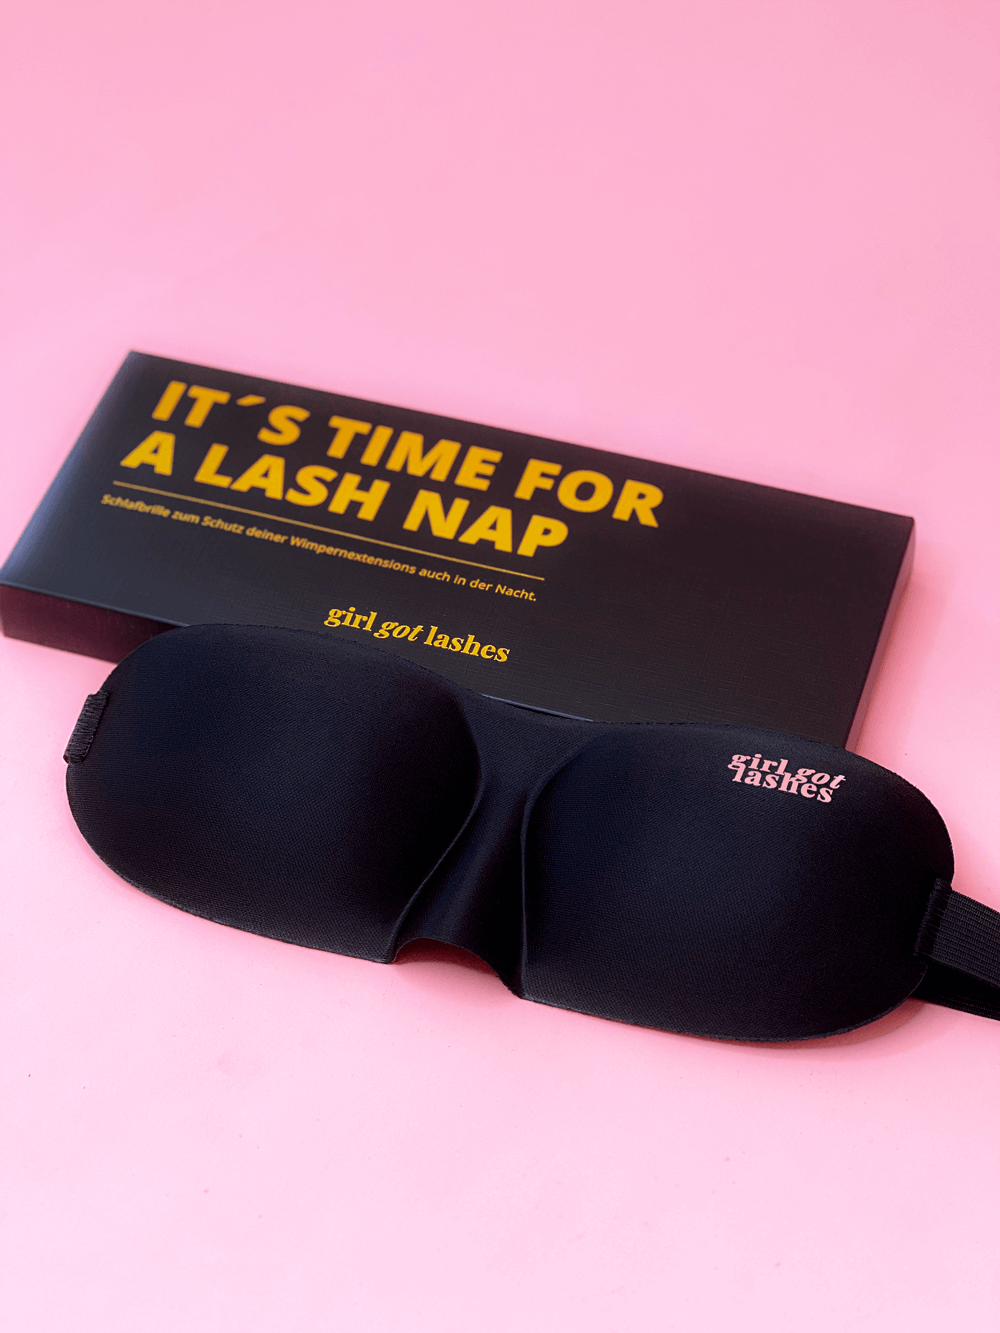 GirlGotLashes Zubehör IT´S TIME FOR A LASH NAP - Schlafmaske